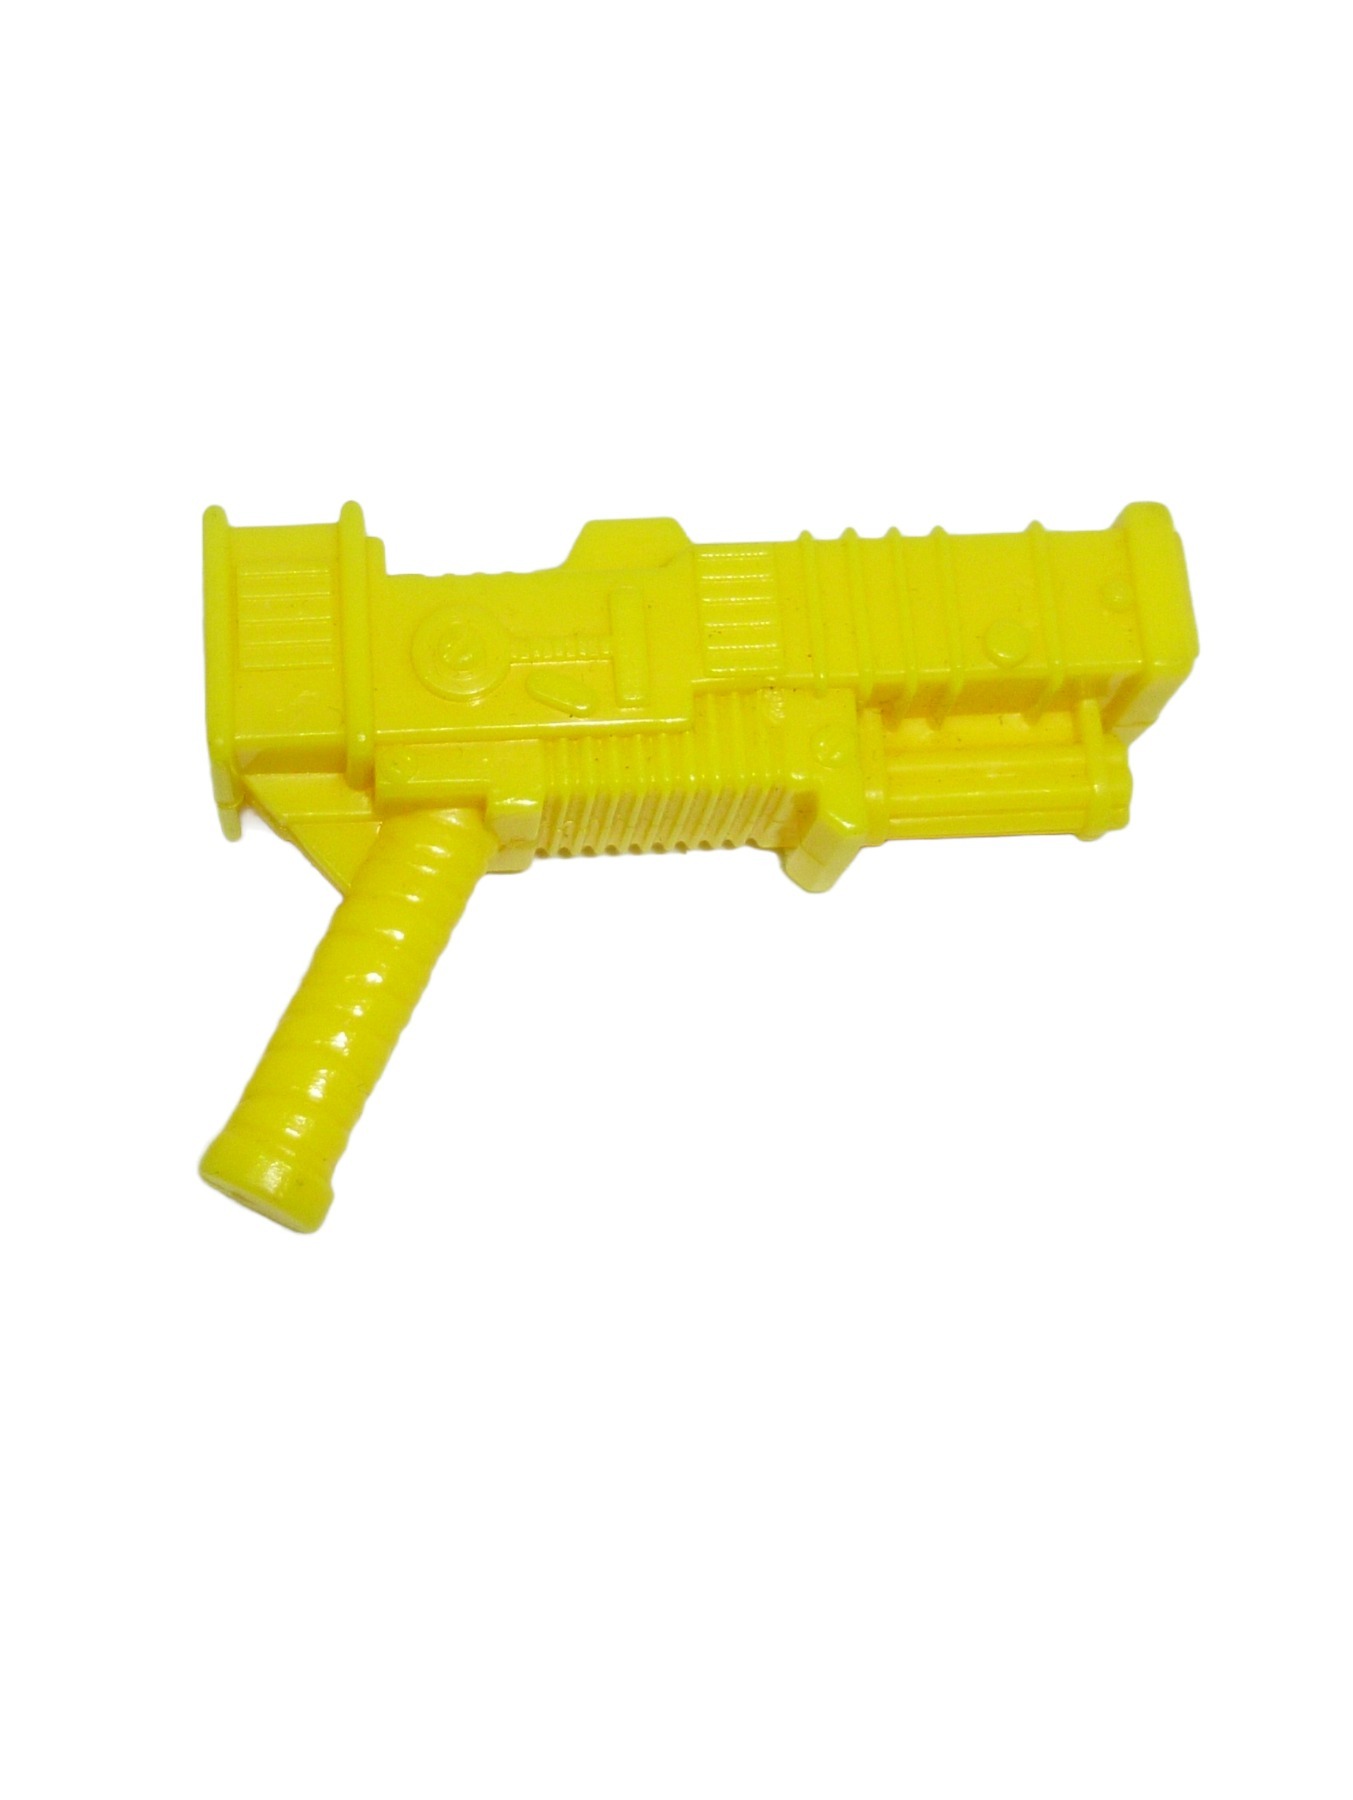 General Troll yellow weapon / blaster